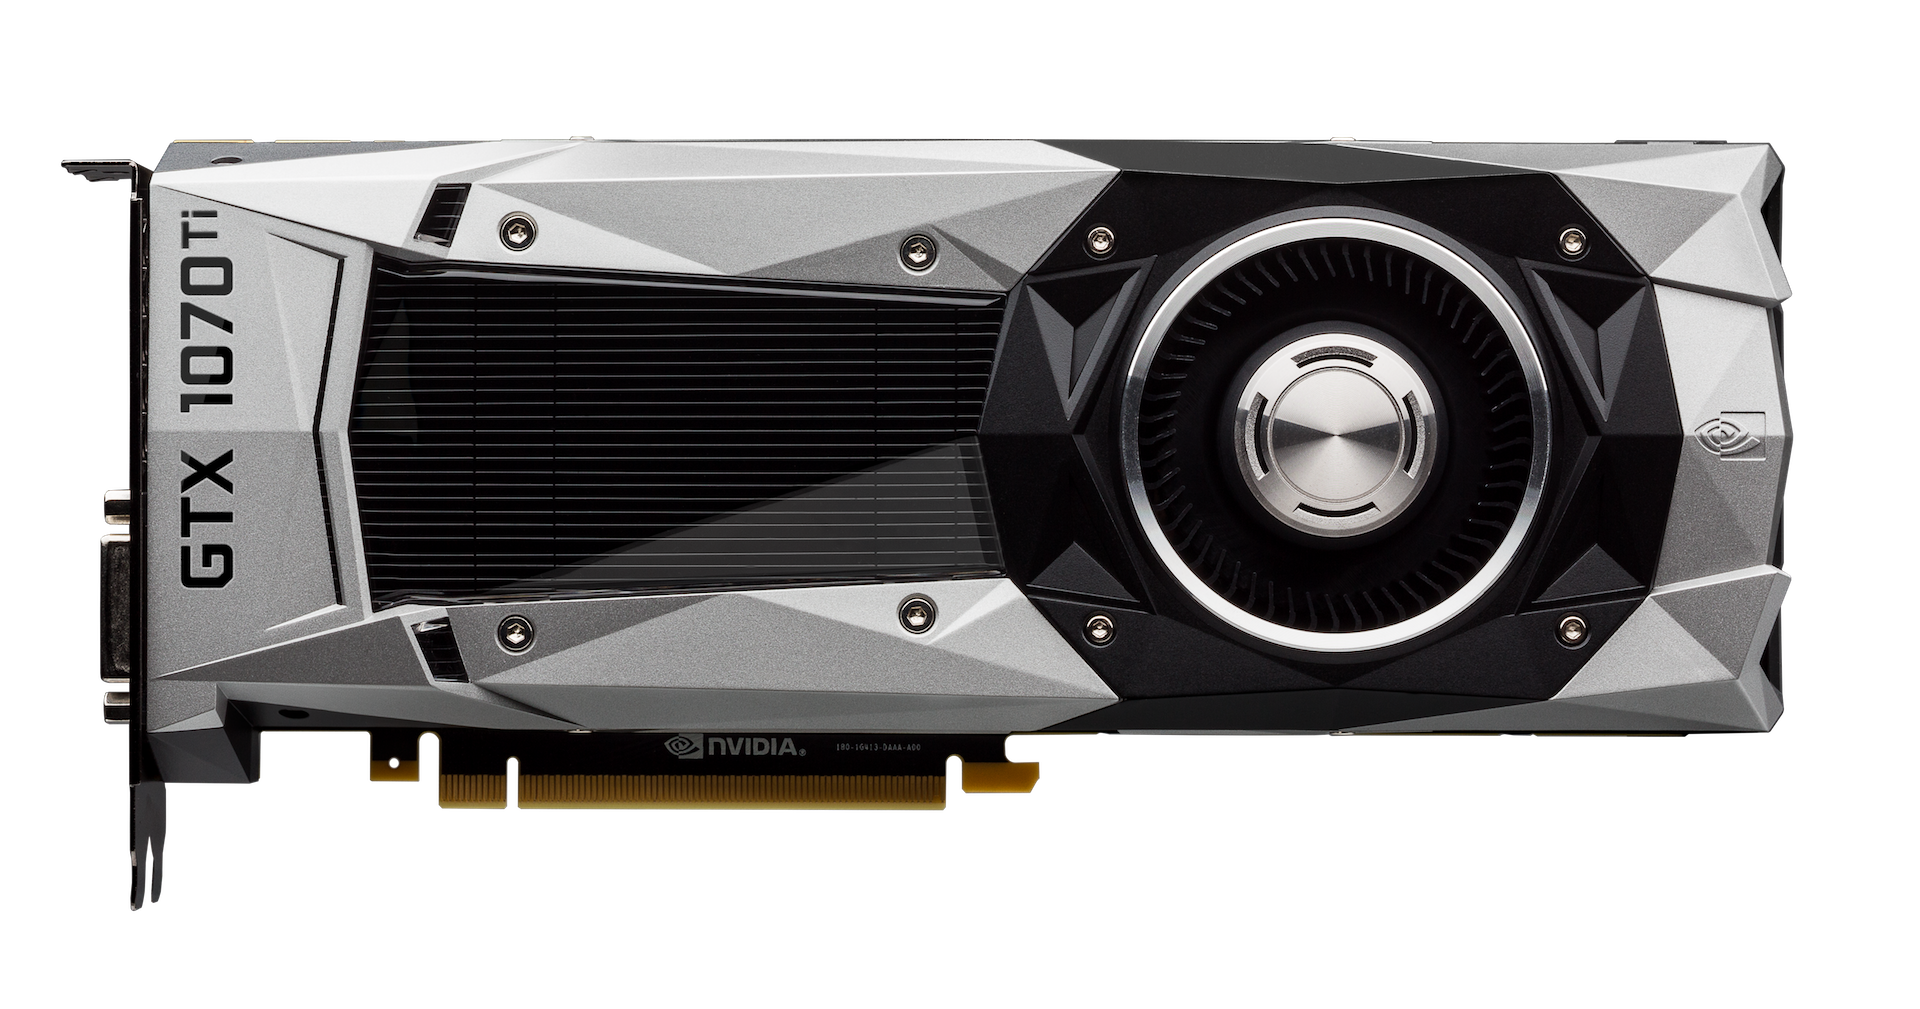 Nvidia GeForce GTX 1070 Ti Founders Edition Desktop GPU Review